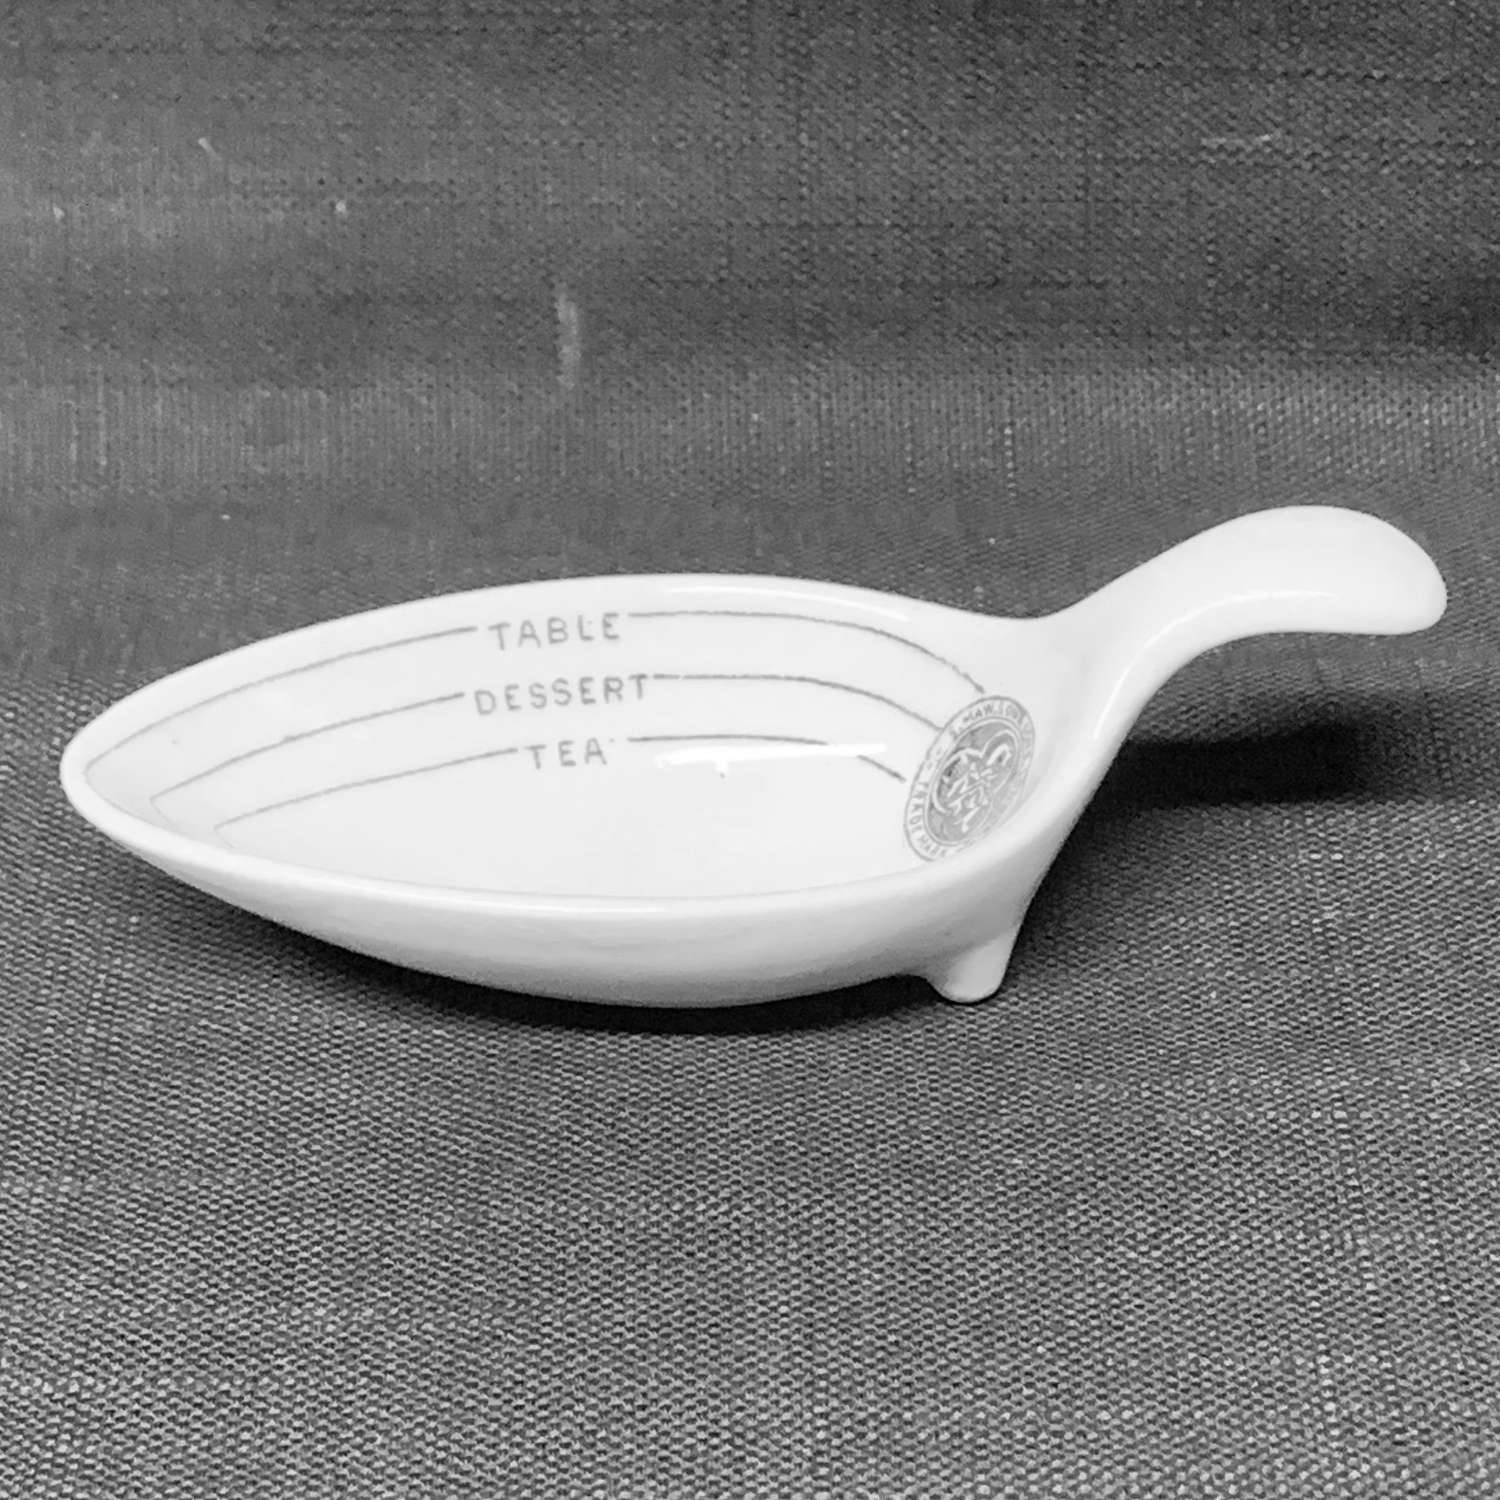 Early Measuring Spoon Ironstone Kitchen Kitchenalia ~ 19th Century